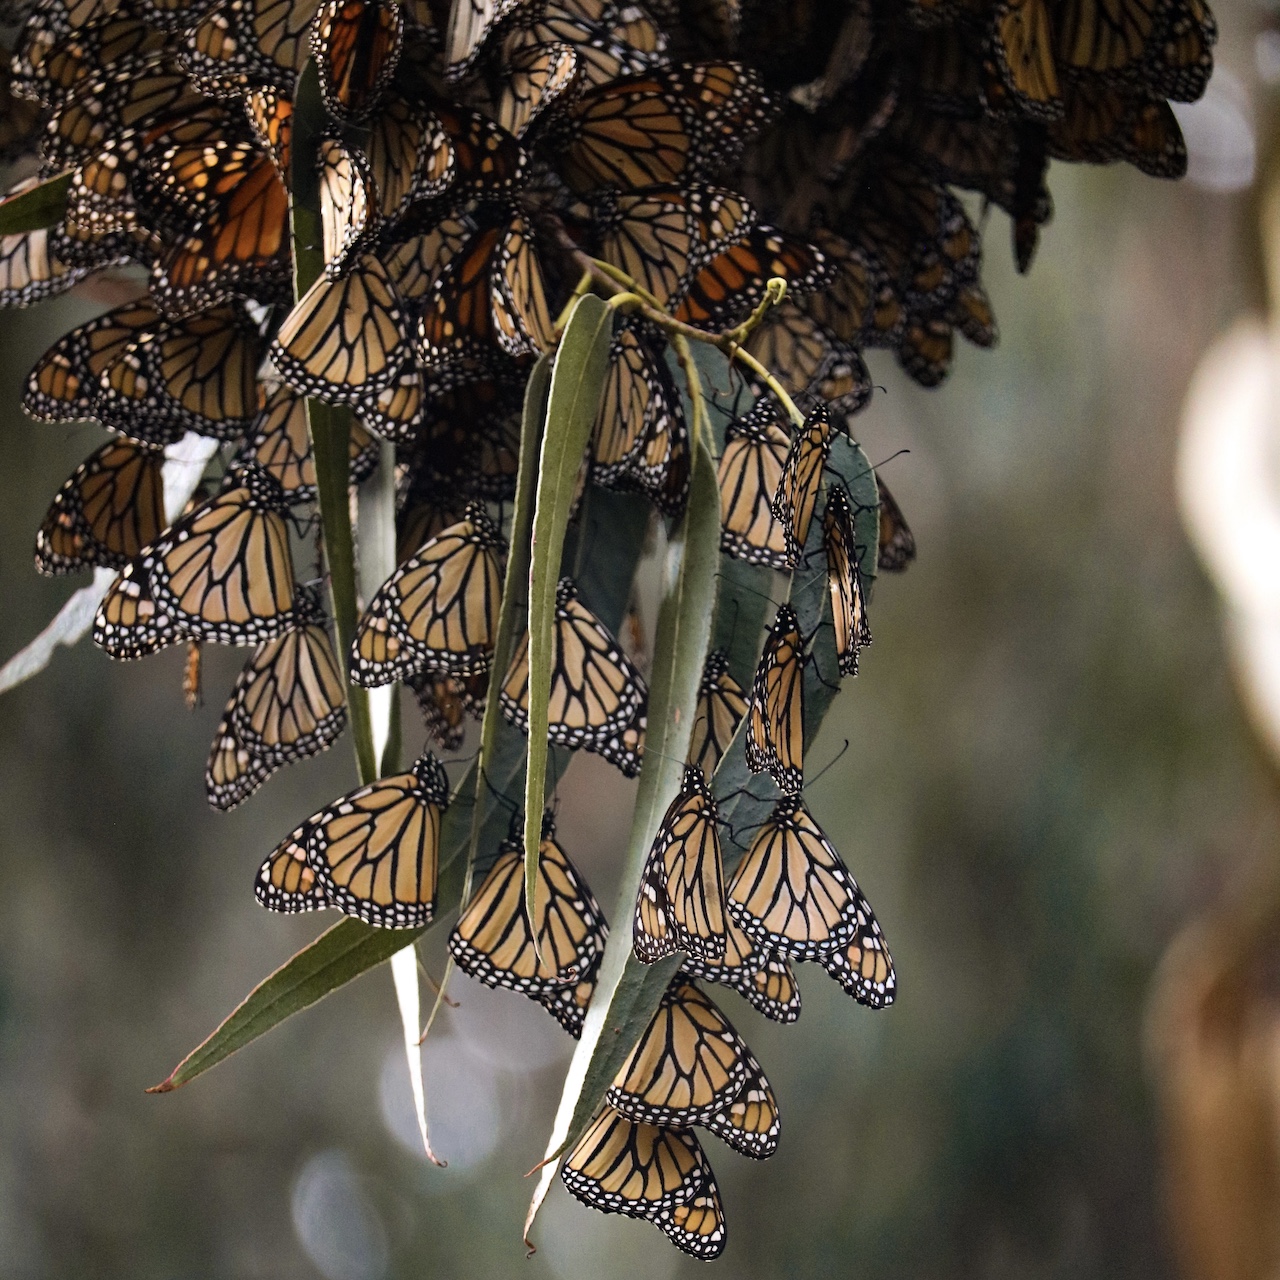 A cluster of Monarch butterflies.